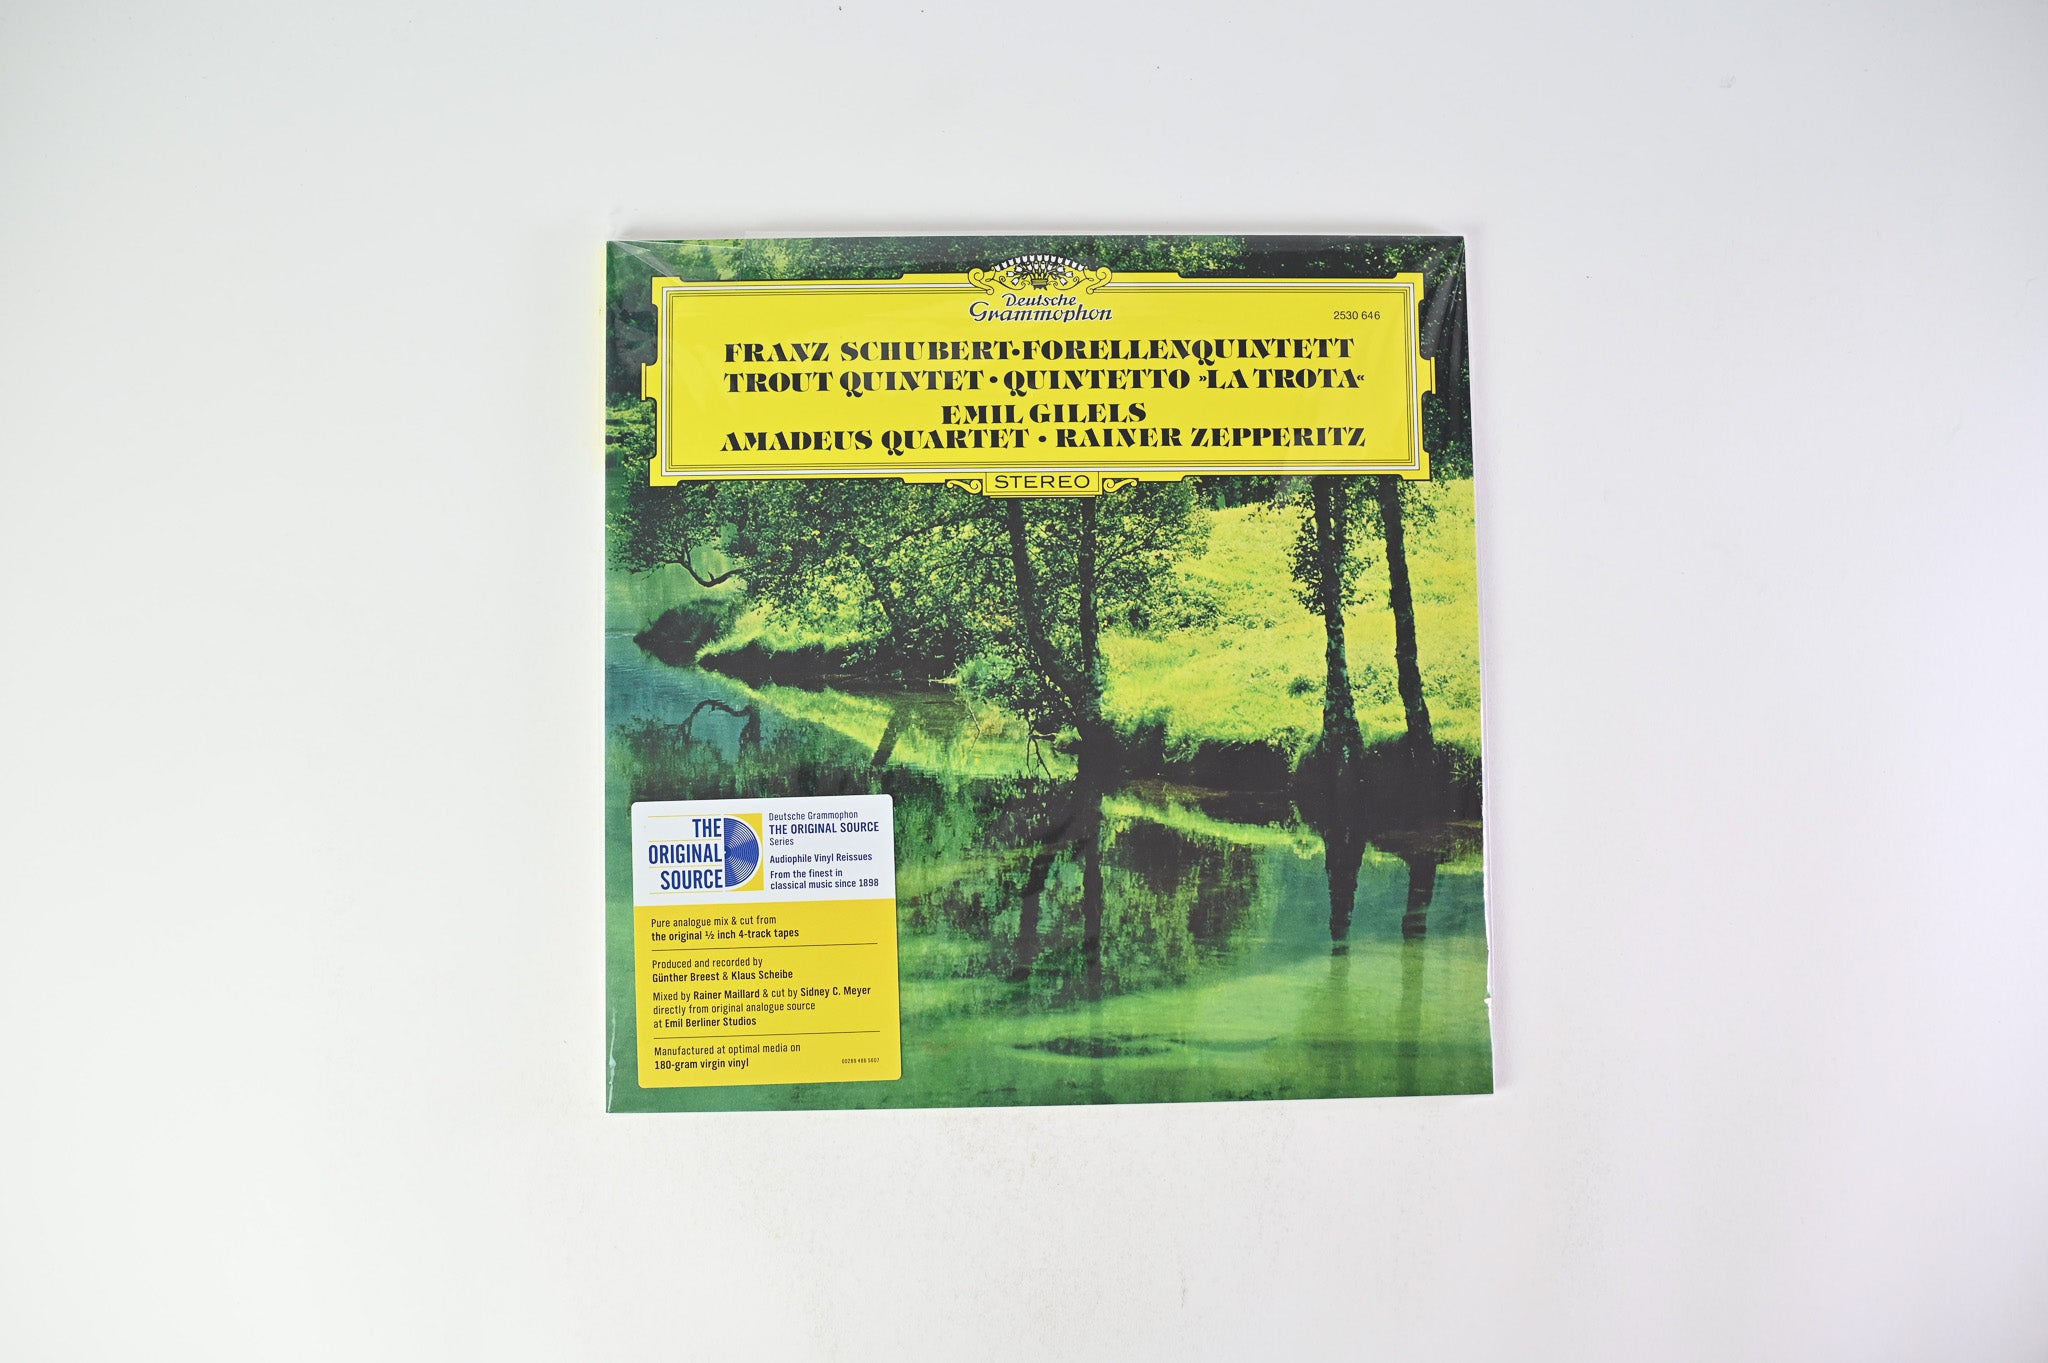 Franz Schubert - Forellenquintett • Trout Quintet • Quintetto »La Trota« on Deutsche Grammophon Reissue